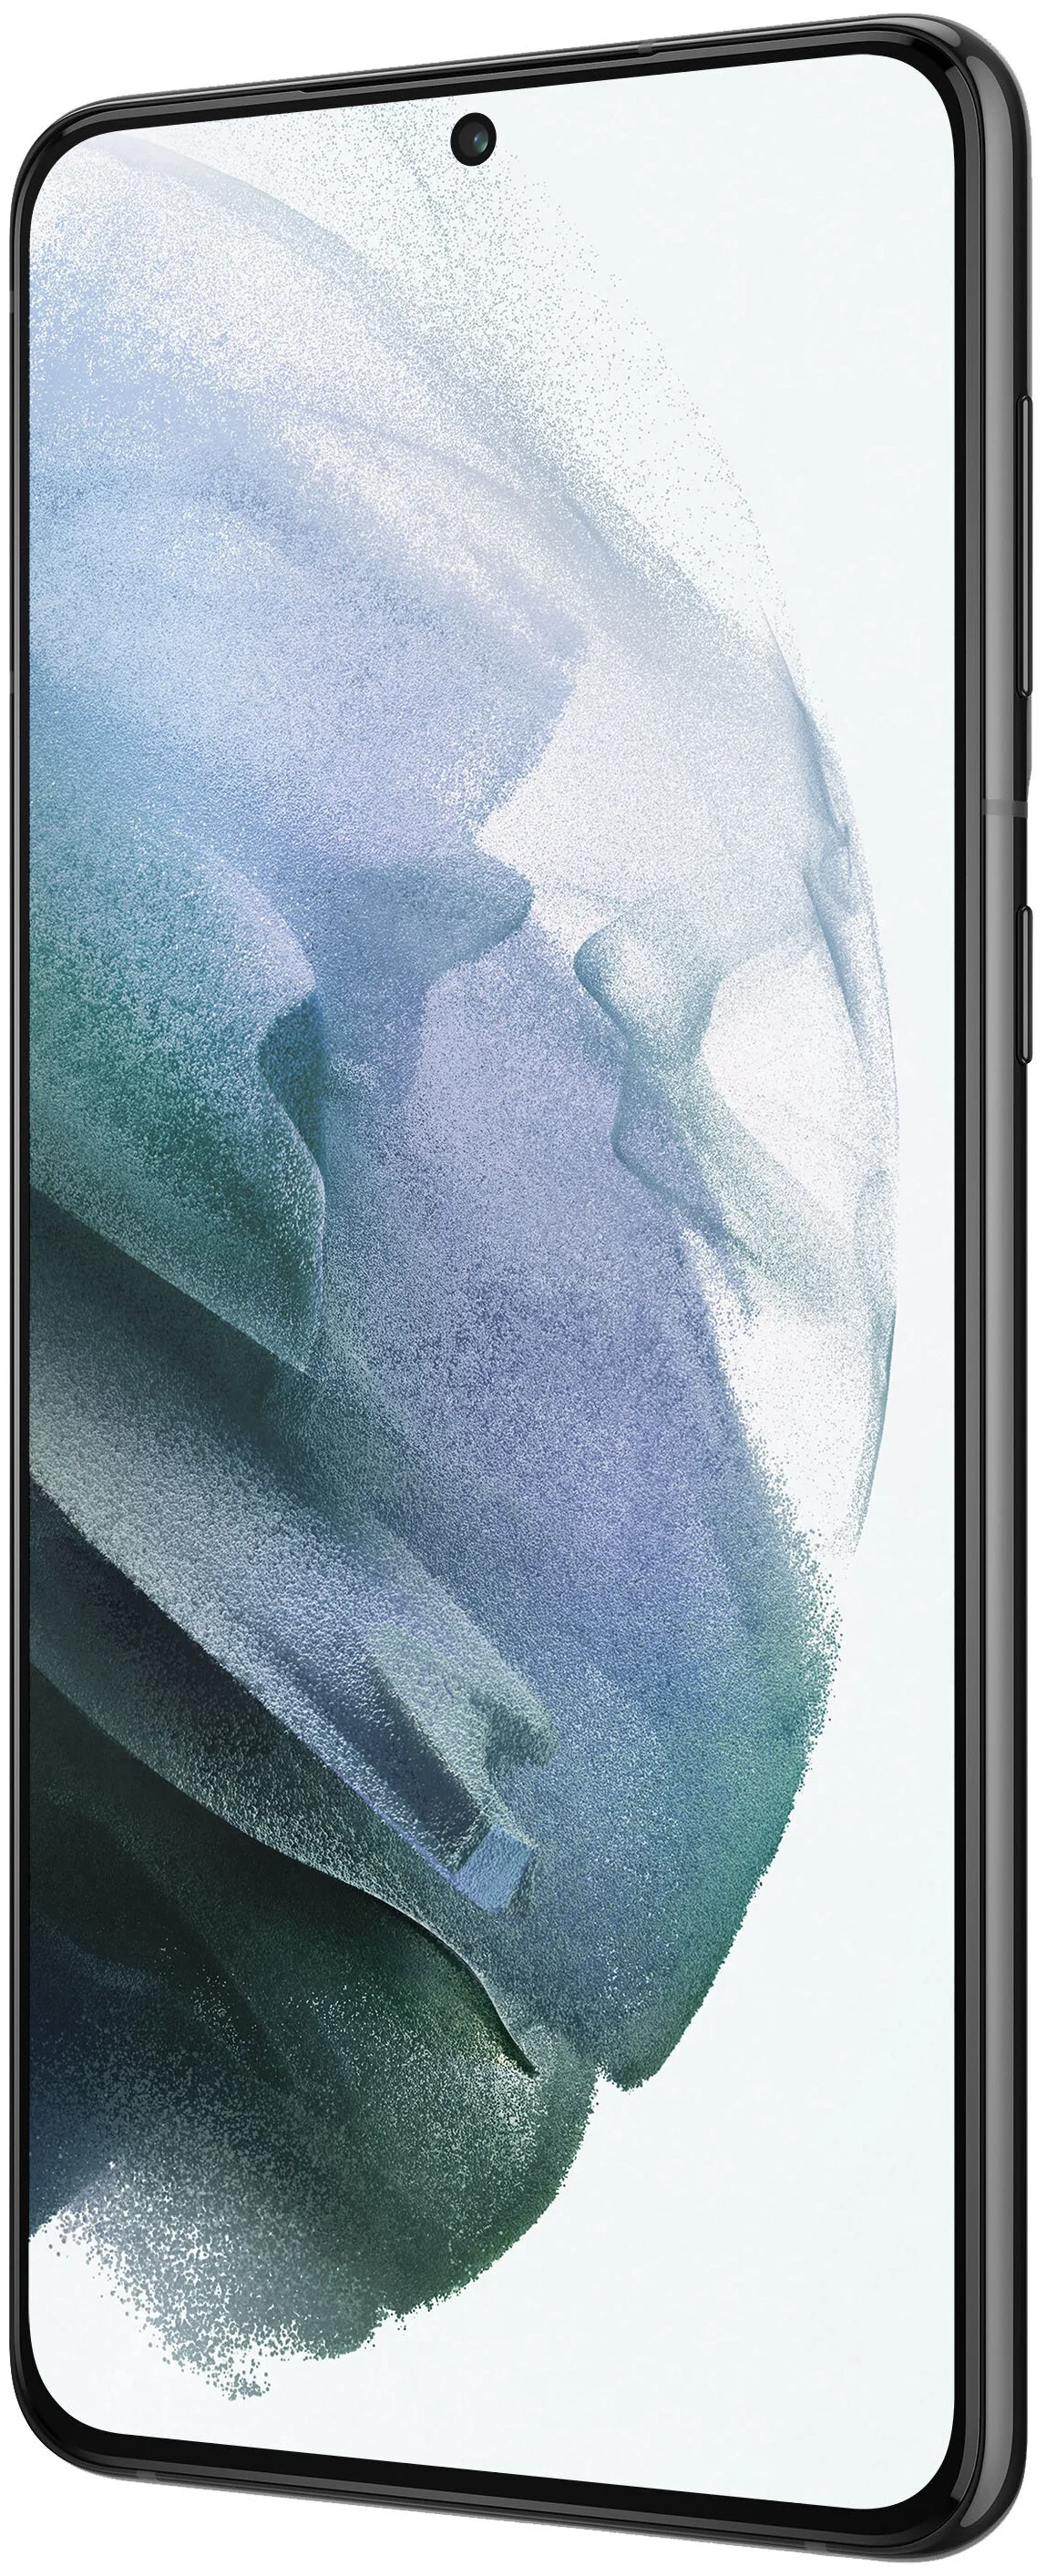 Samsung Galaxy S21+ 5G (SM-G996B) - SIM-карты: 2 (nano SIM+eSIM)